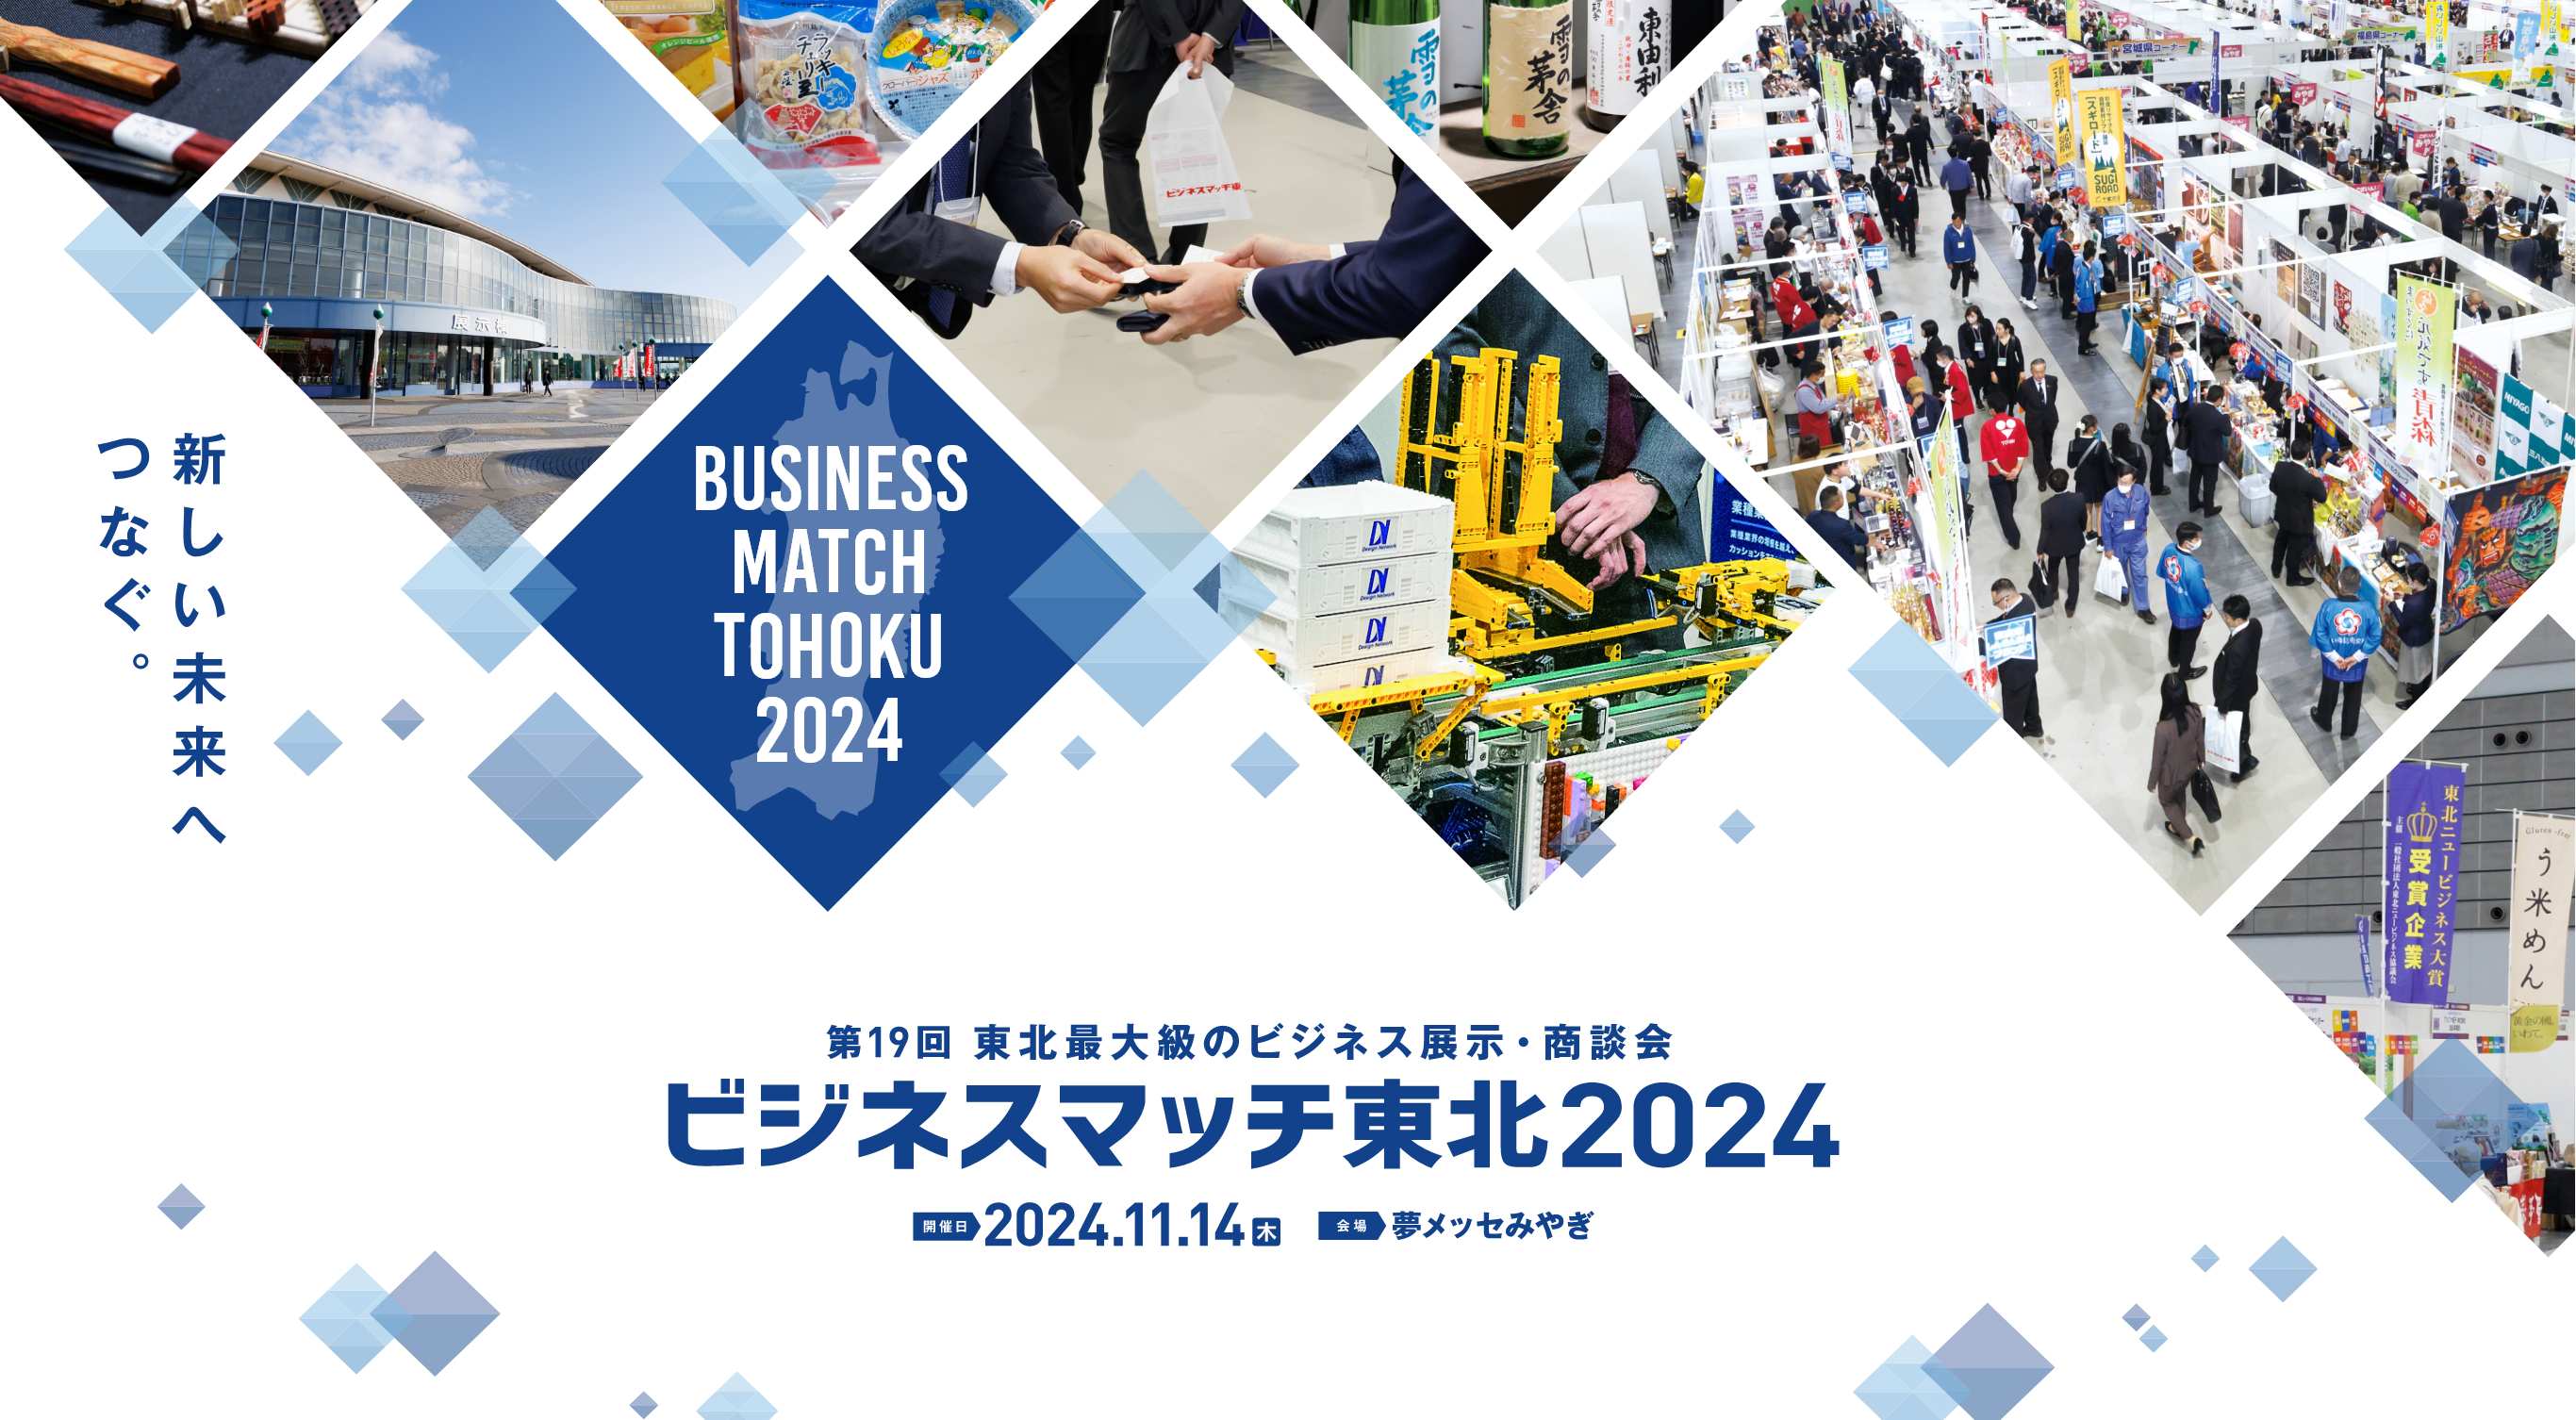 BUSINESS MATCH TOHOKU 2024 第19回 東北最大級のビジネス展示・商談会 ビジネスマッチ東北 2024